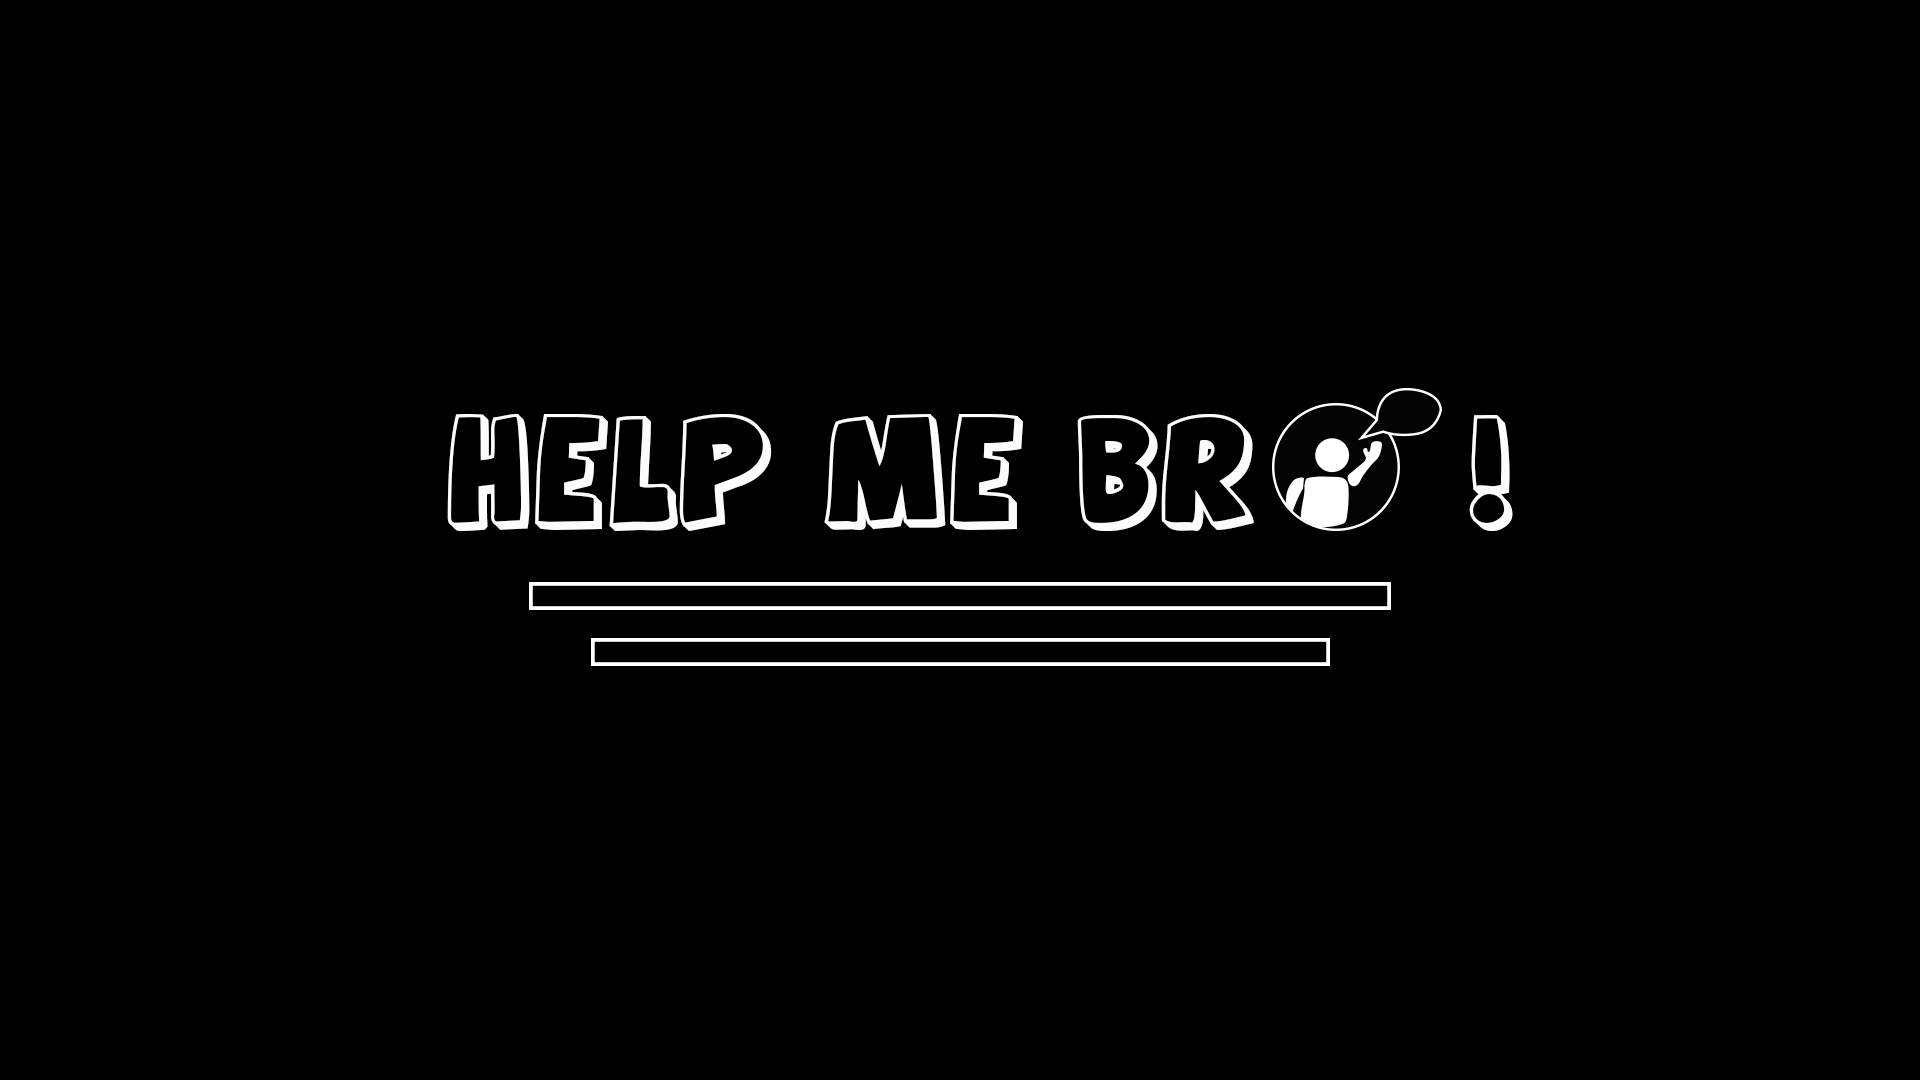 Help me Bro!